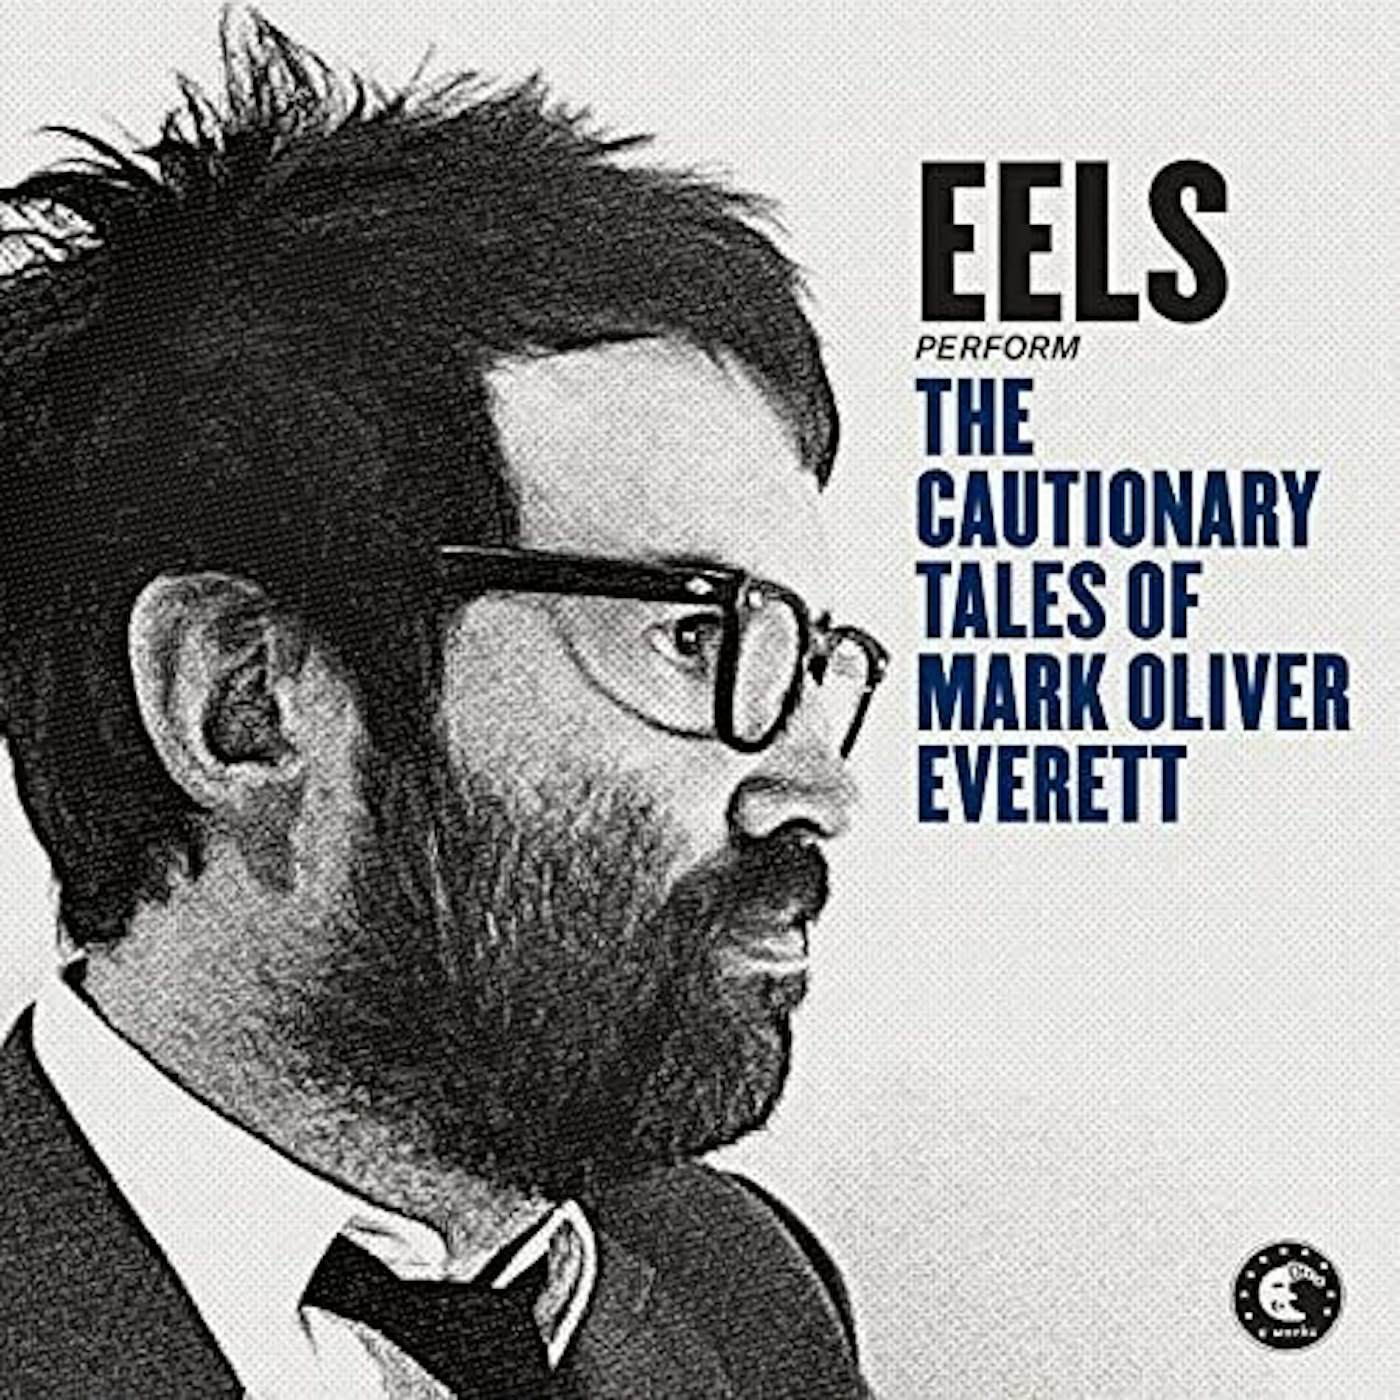 Eels CAUTIONARY TALES OF MARK OLIVER EVERETT Vinyl Record